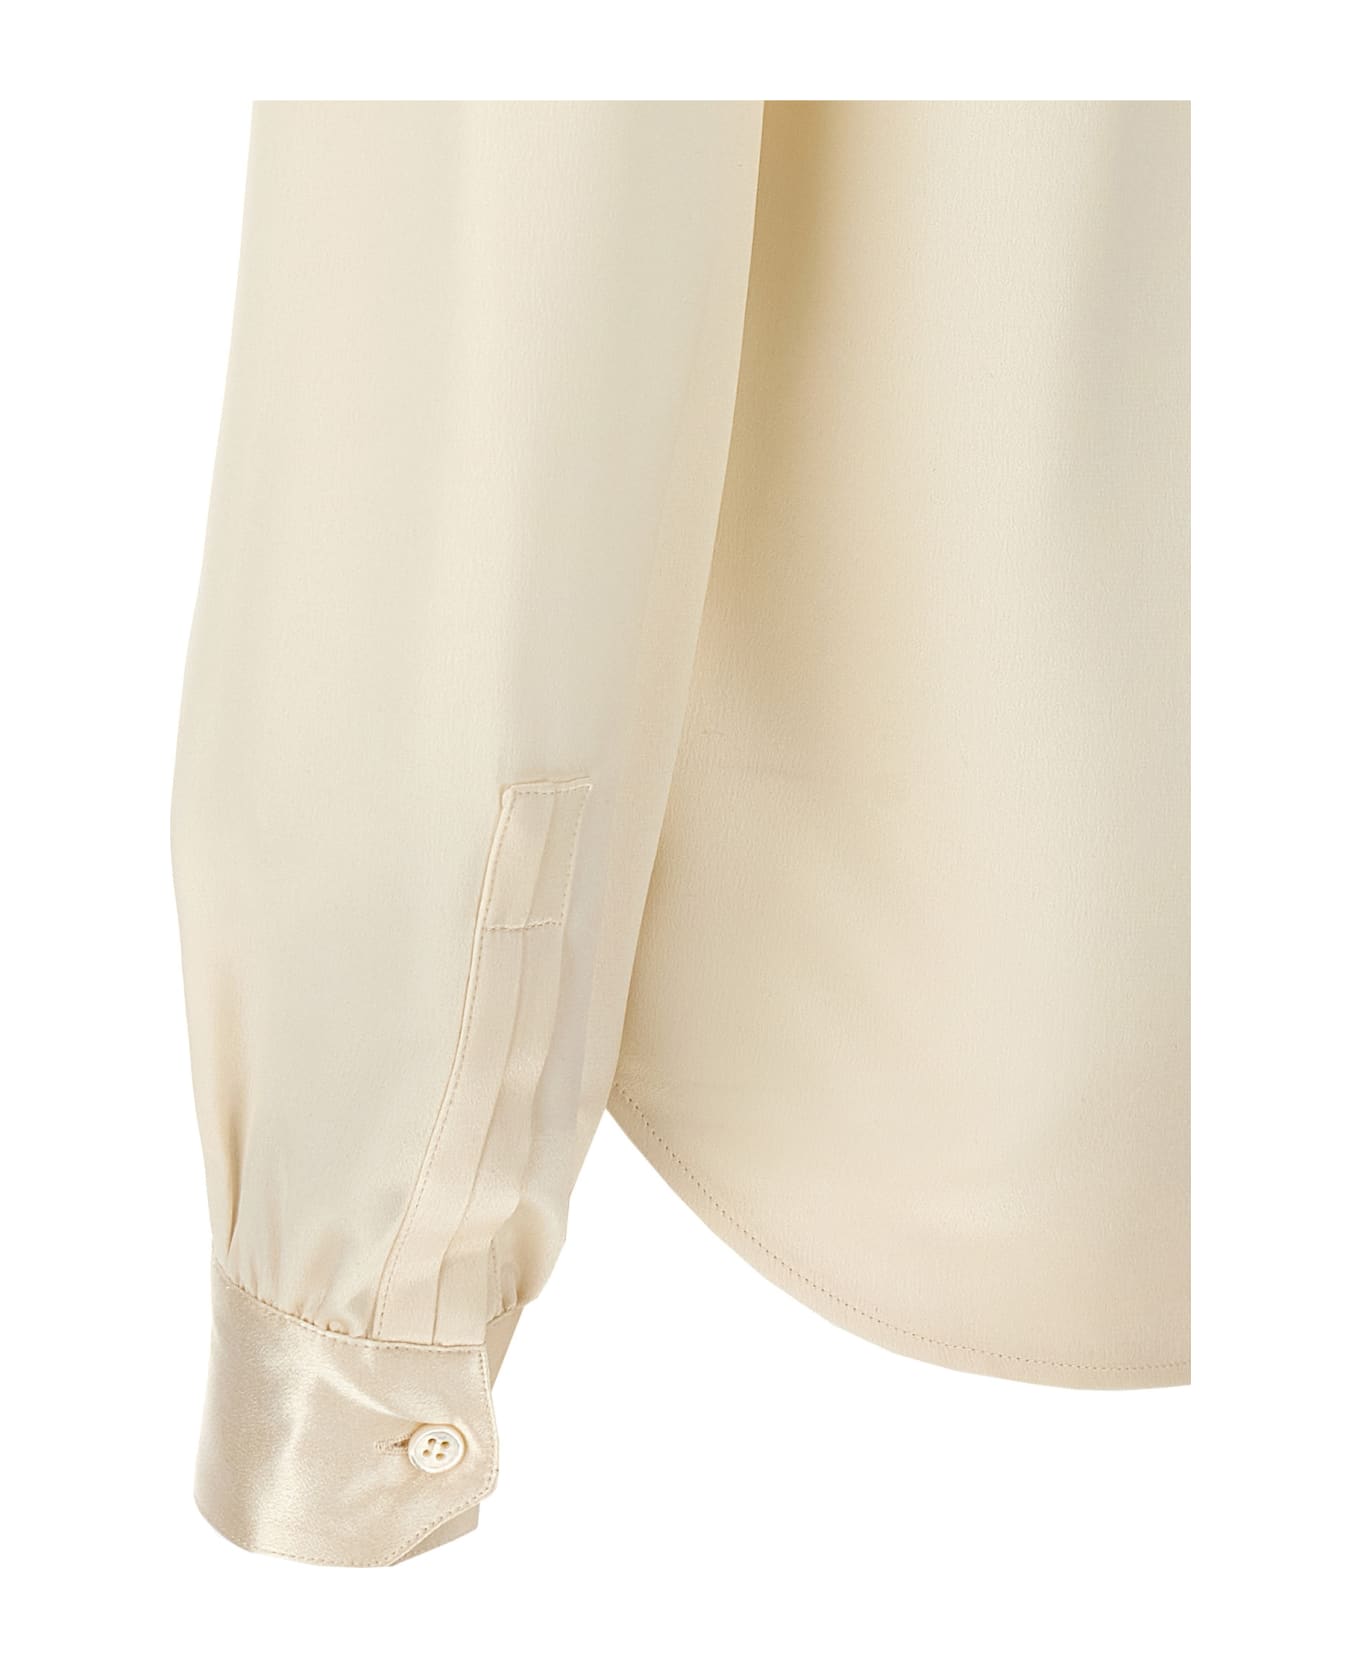 Saint Laurent Lavalliere Silk Shirt - White ブラウス